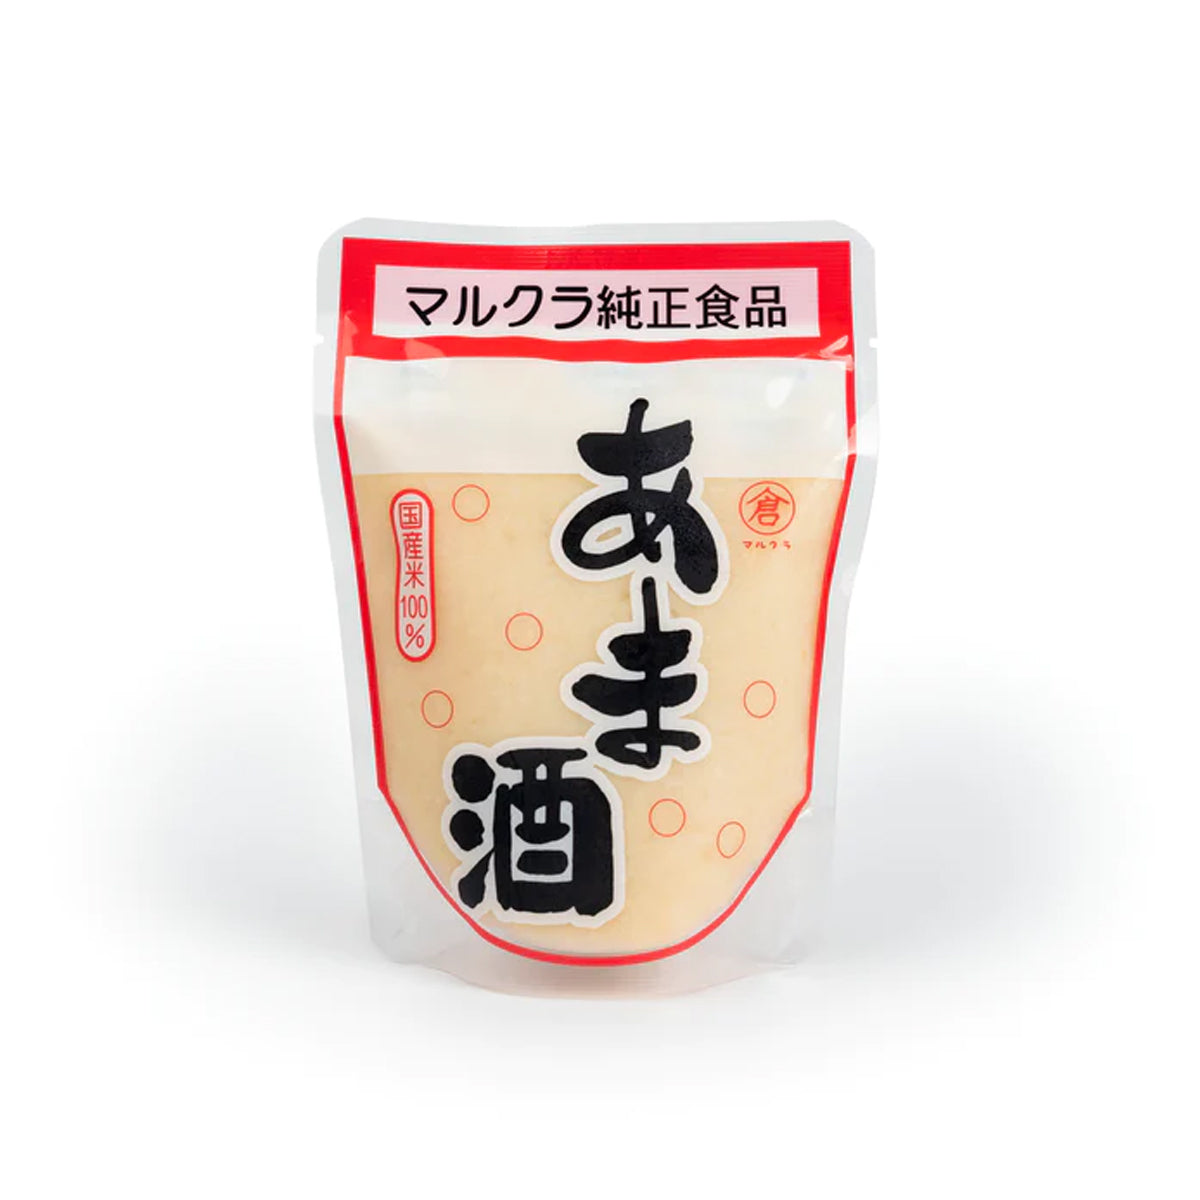 Japanese Probiotic Food Set